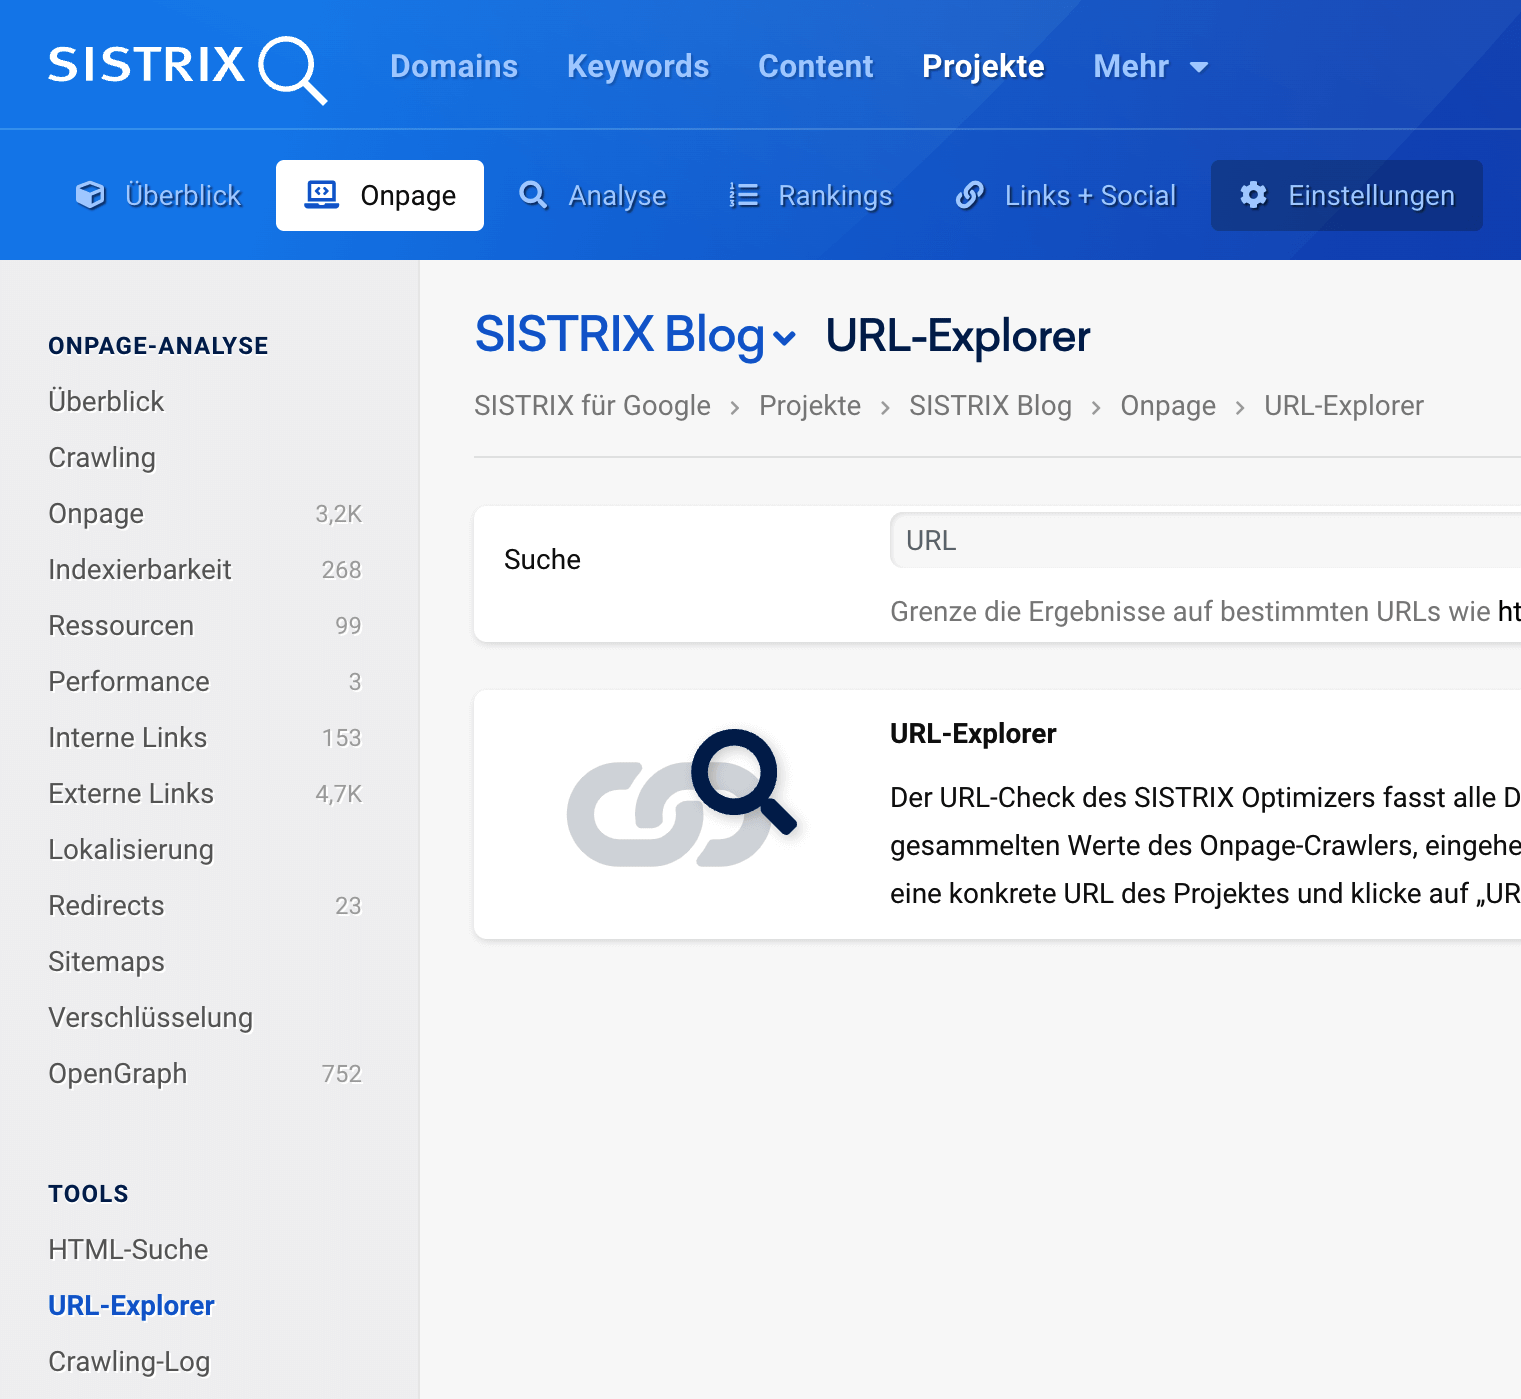 Navigation zum URL-Explorer in SISTRIX